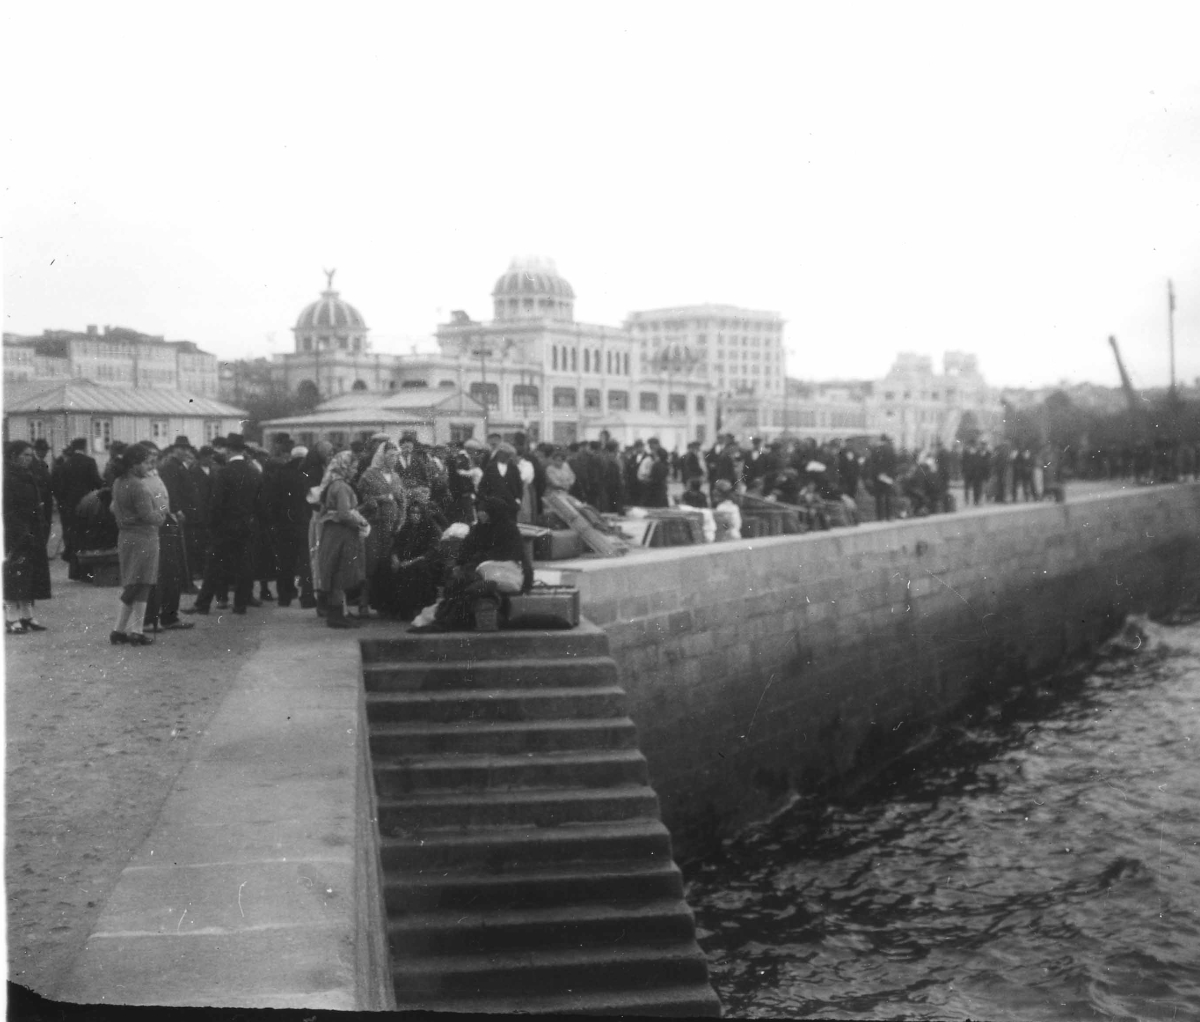 Migrants at the dock (Arquivo do Reino de Galicia)